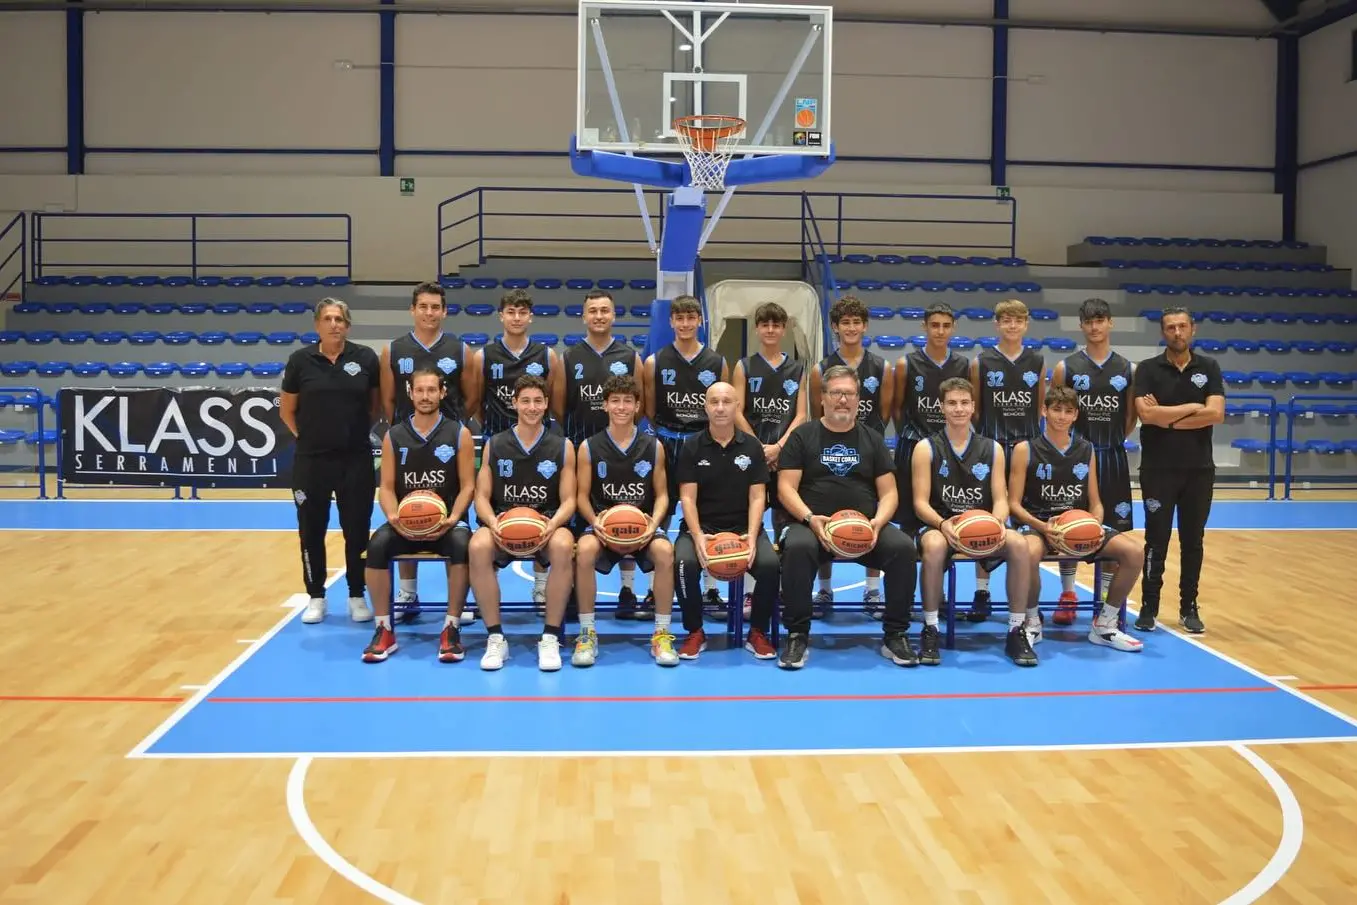 La Klass Basket Coral Alghero, squadra partecipante al torneo di Divisione Regionale 1 (foto concessa)